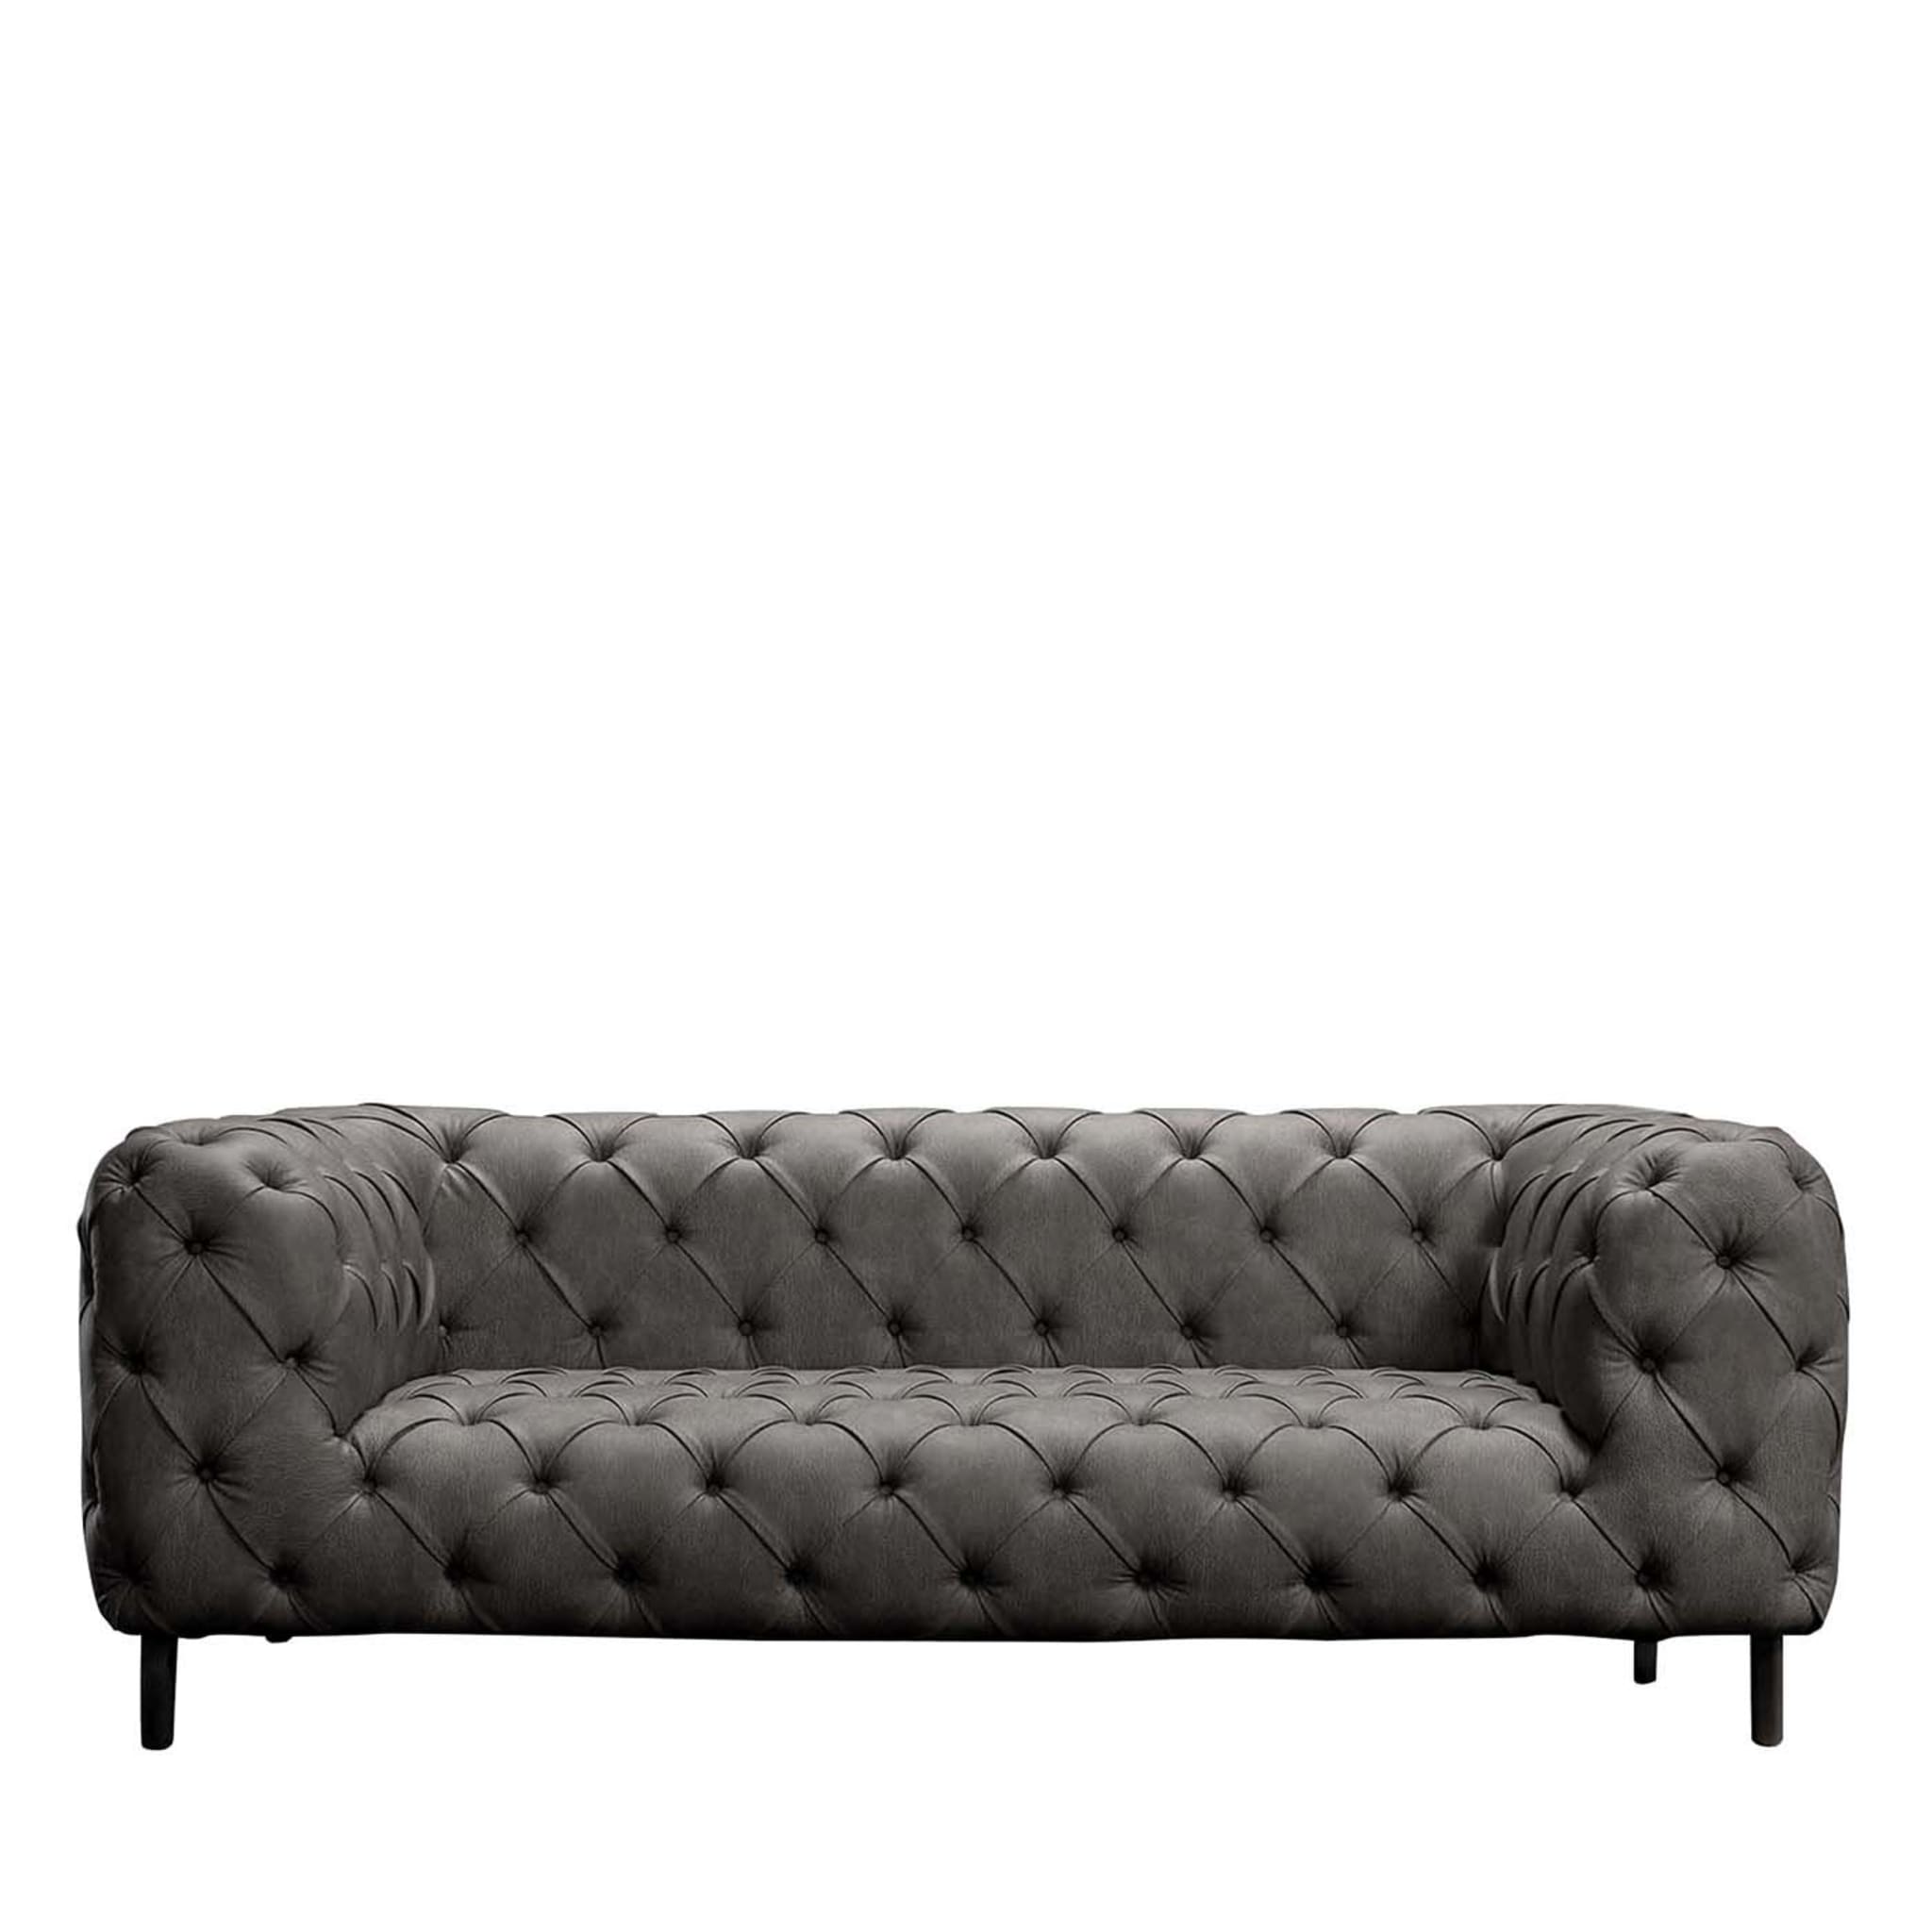 Churchill Tuxedo Sofa - Main view